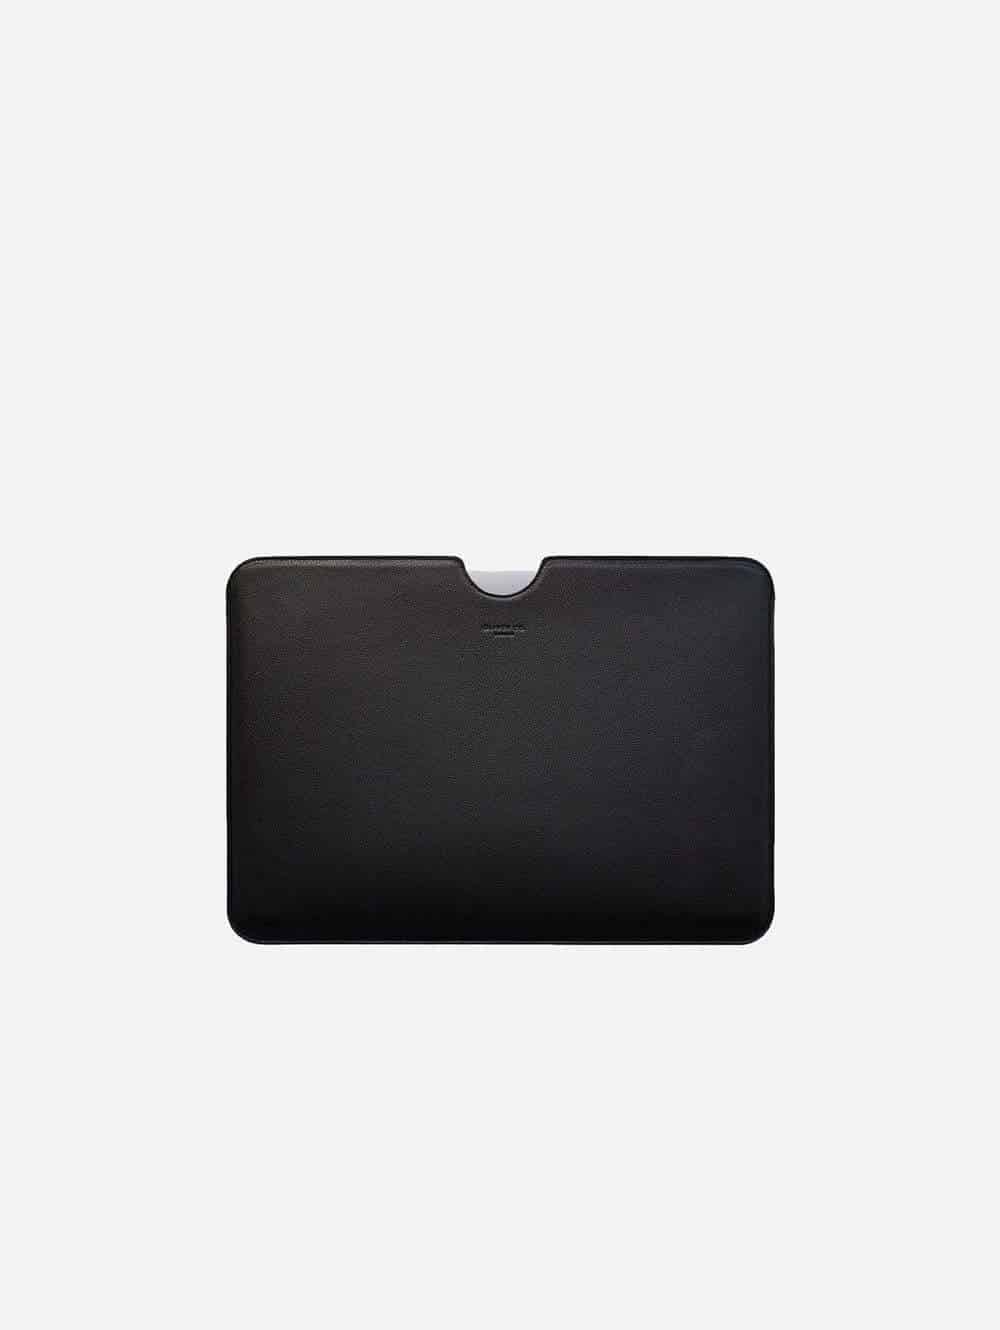 Black vegan apple leather laptop sleeve